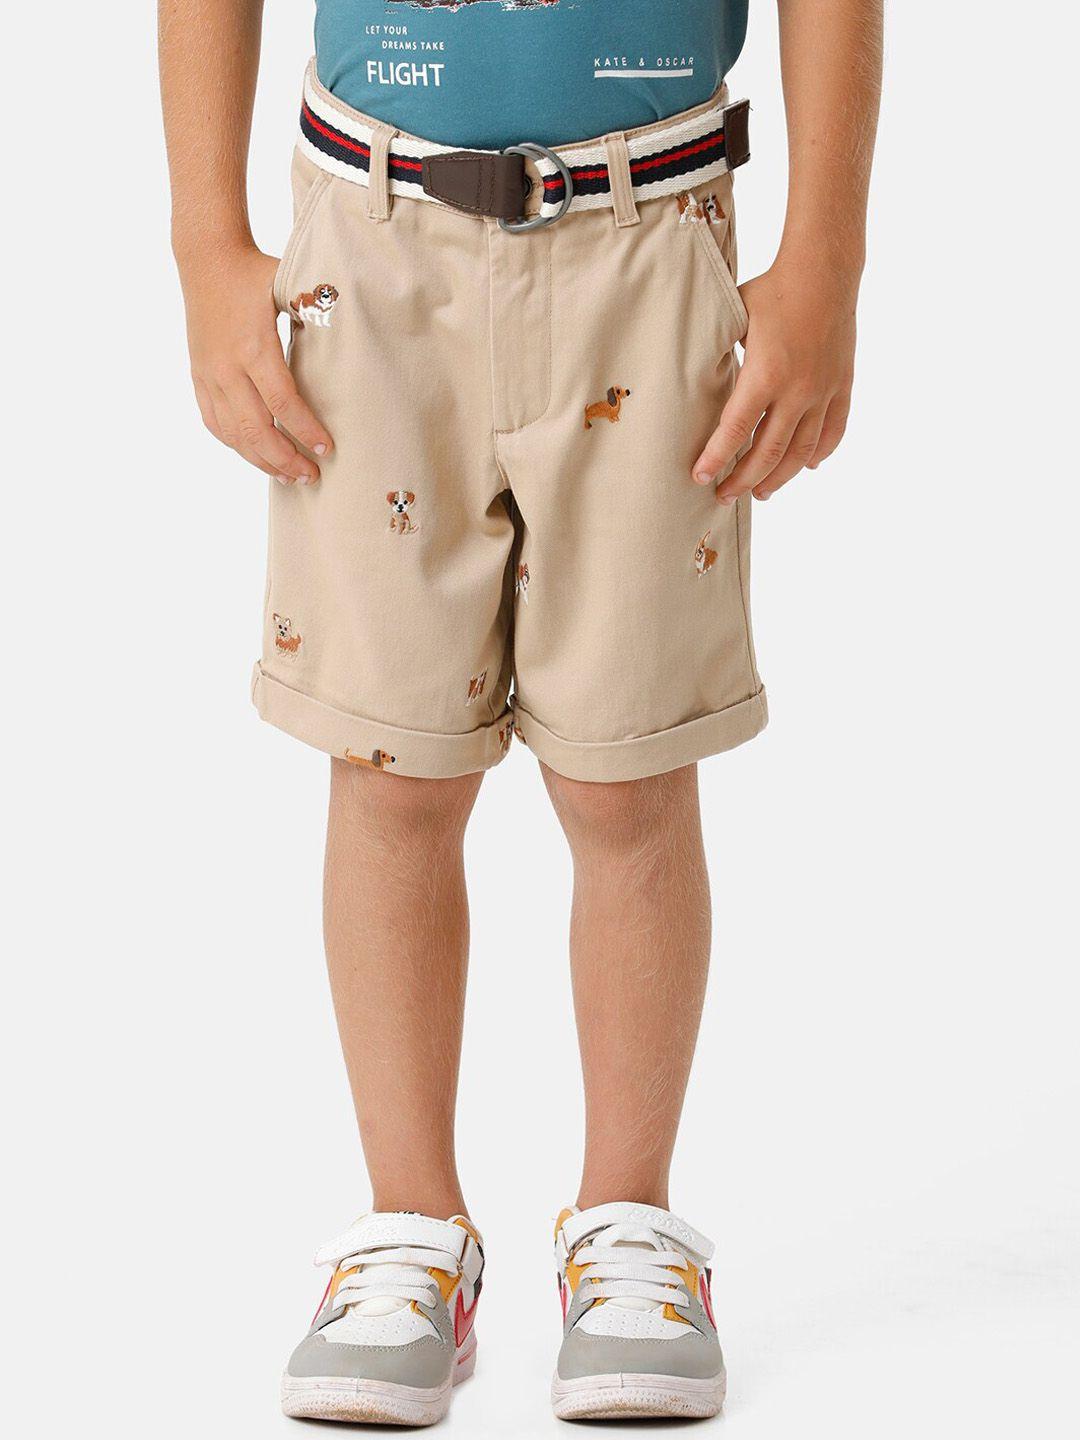 kate & oscar boys conversational printed regular cotton shorts